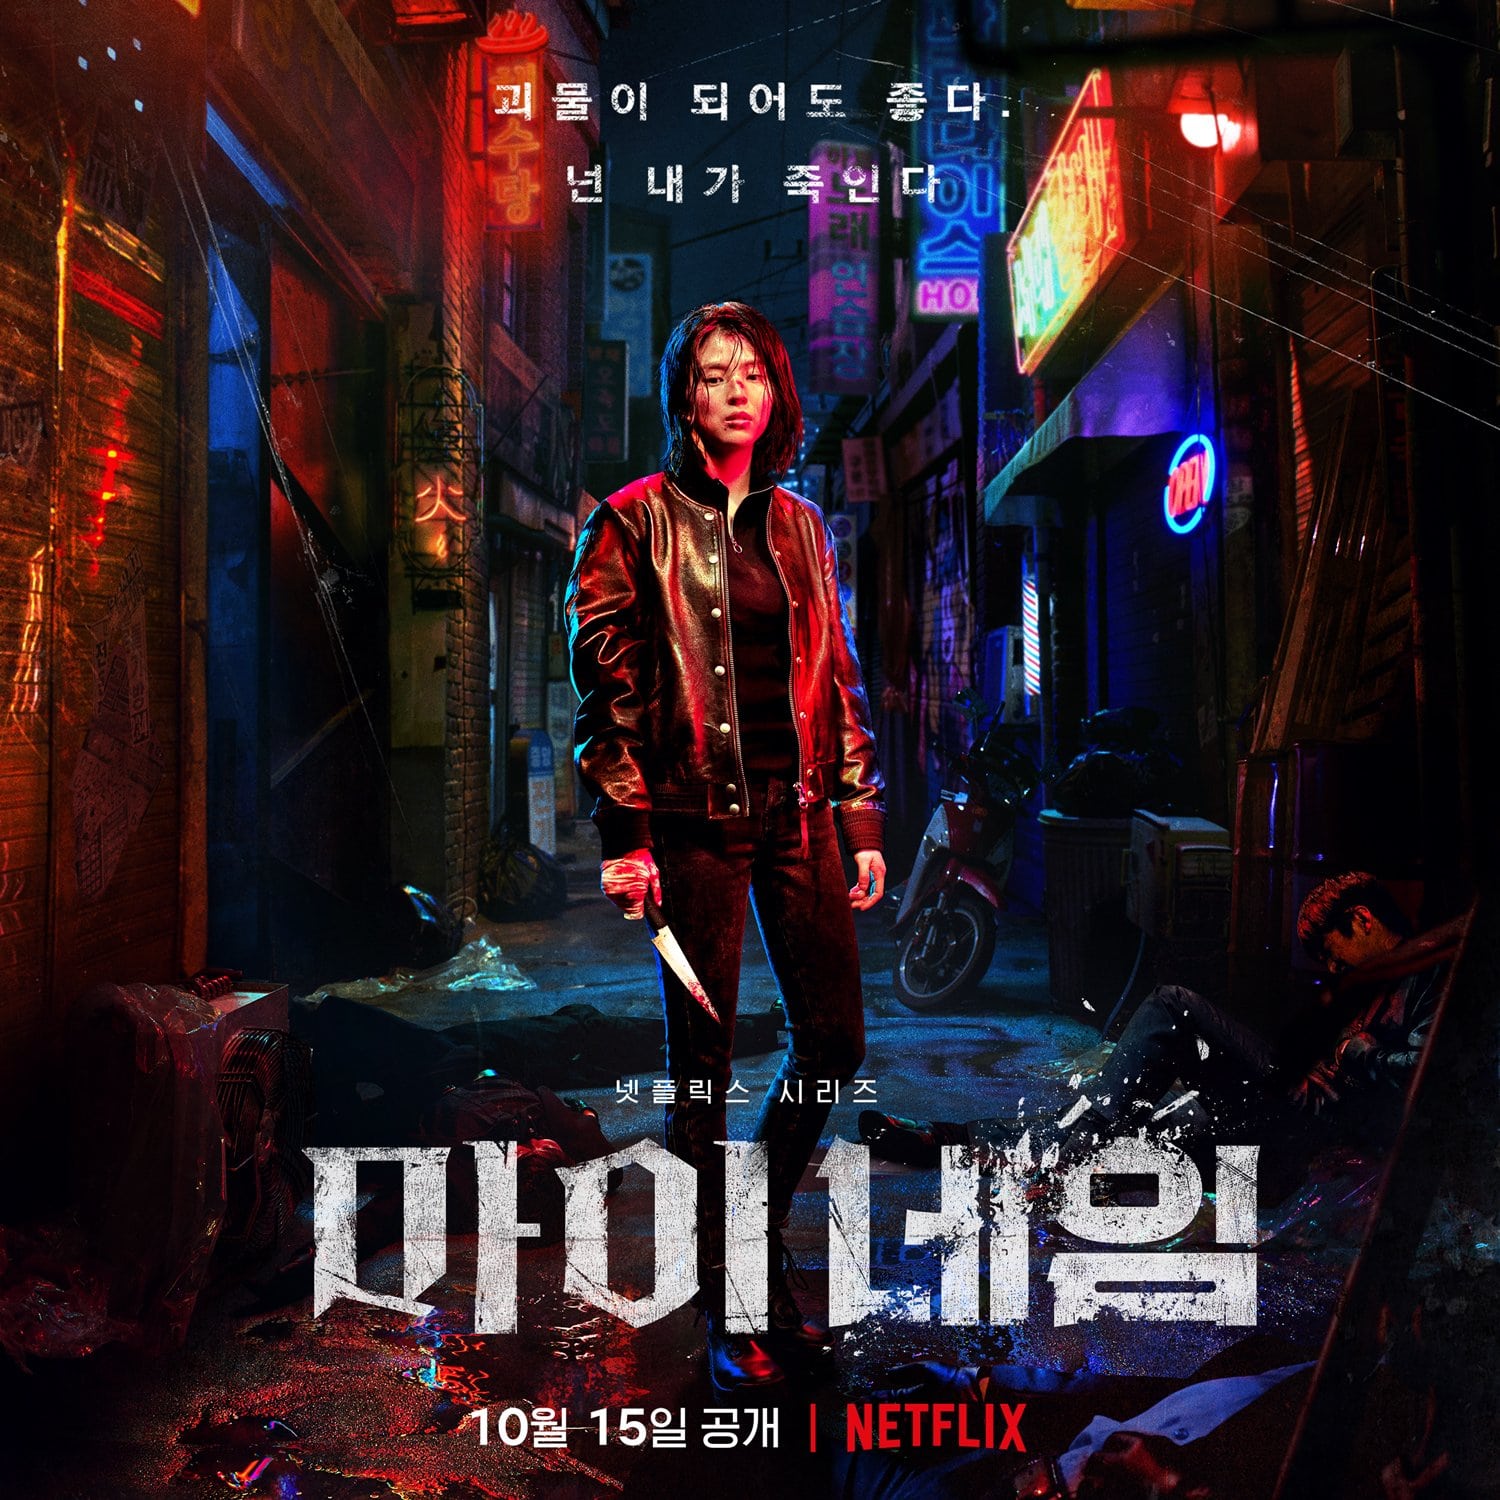 Netflix's My Name starring Han So Hee